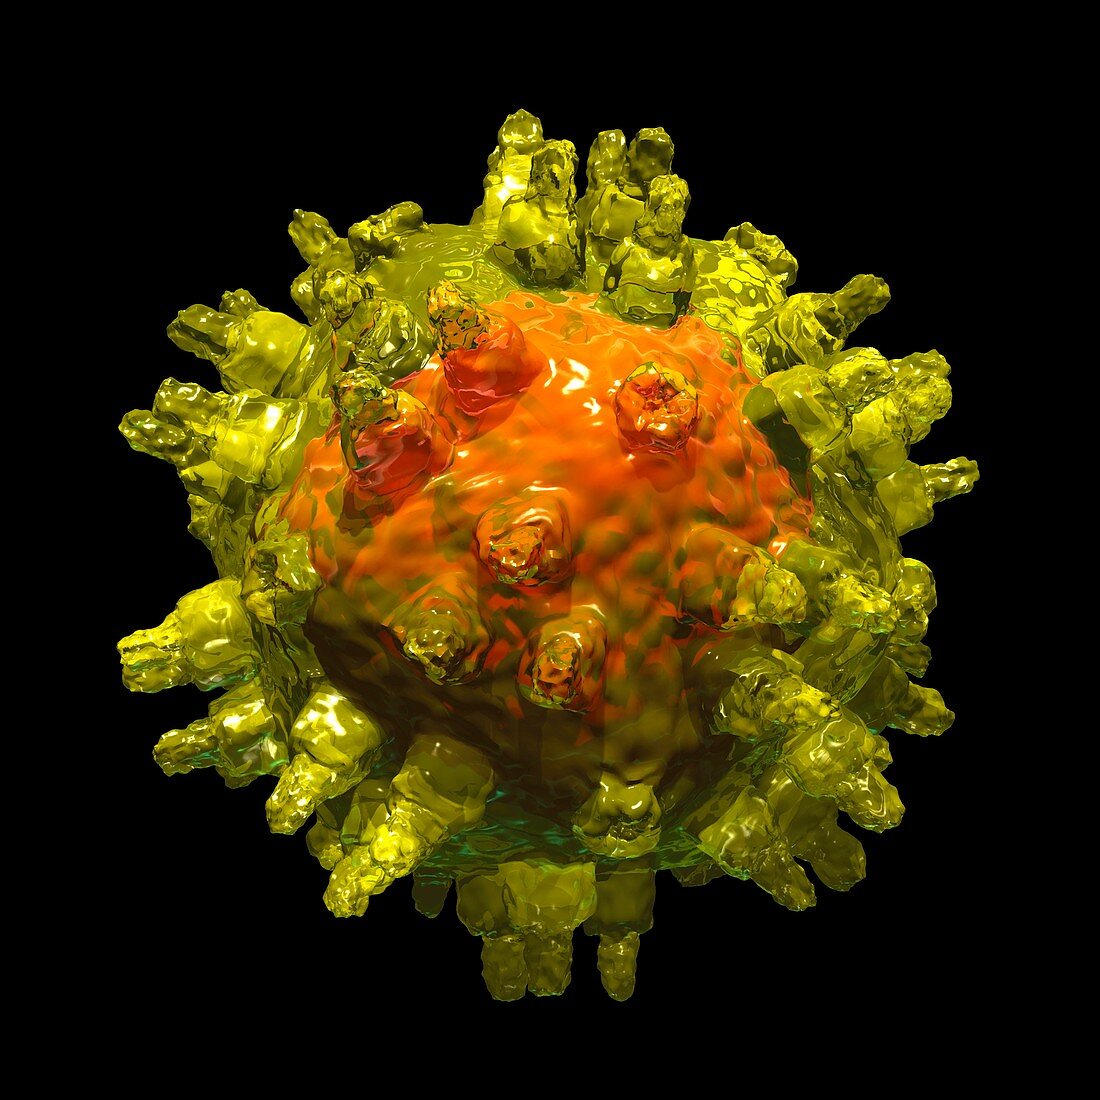 Adeno-associated virus